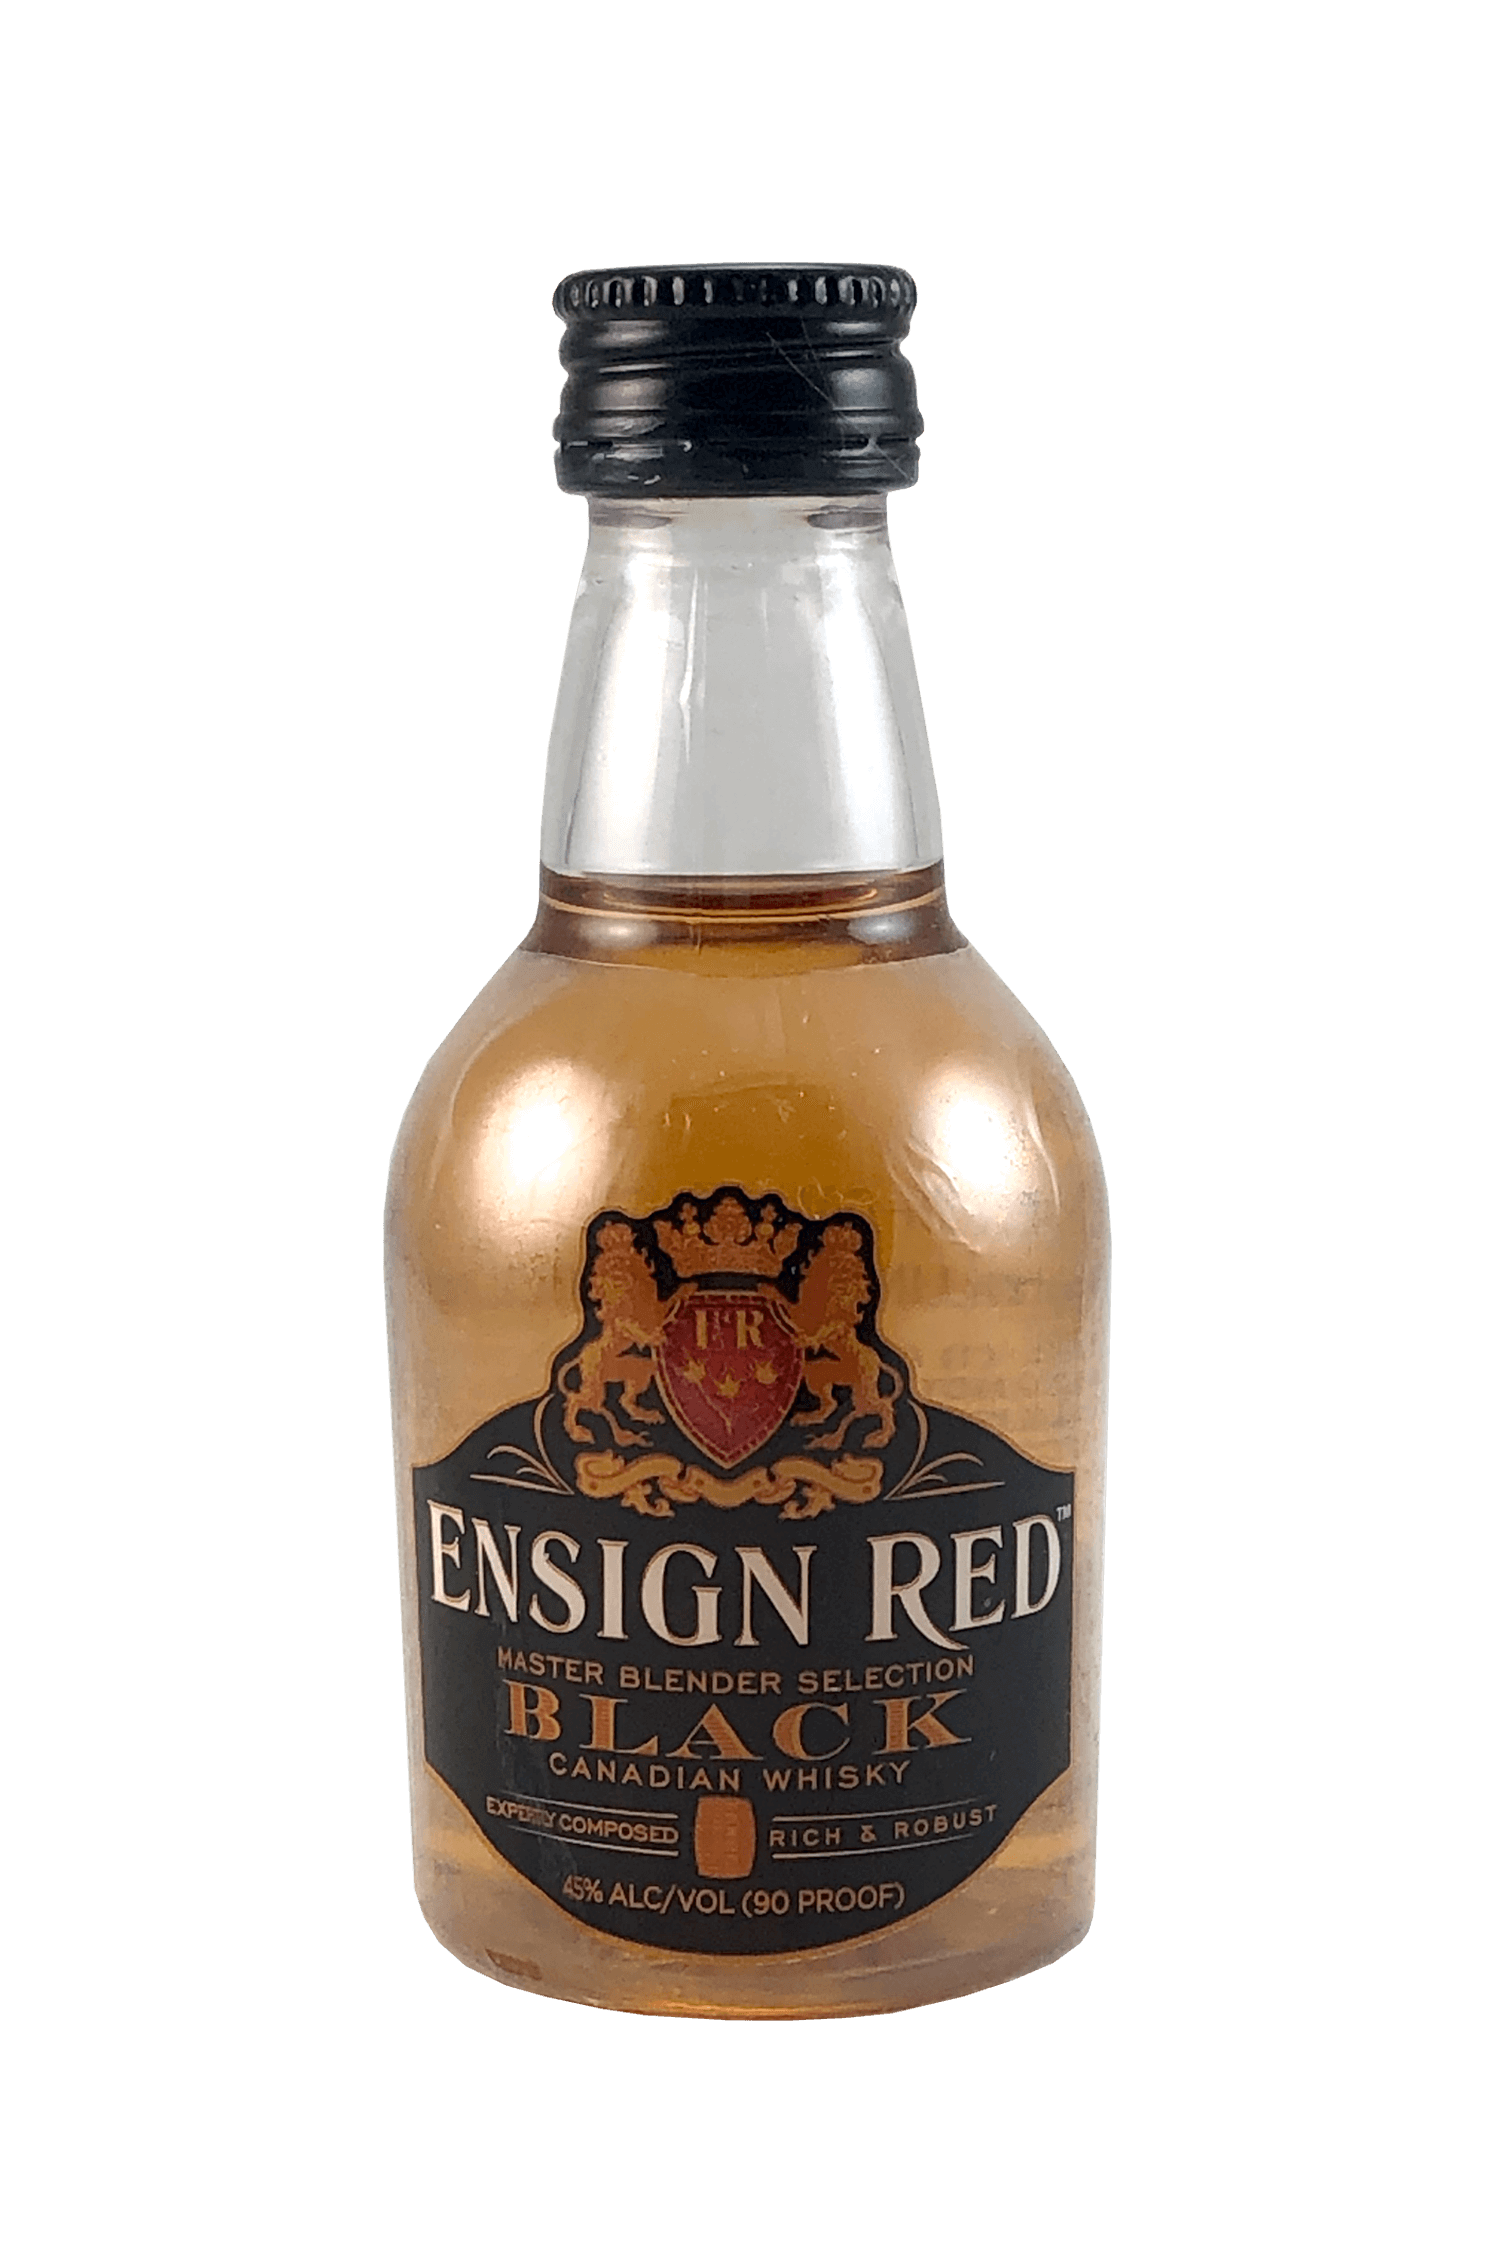 Ensign Red Black Canadian Whisky